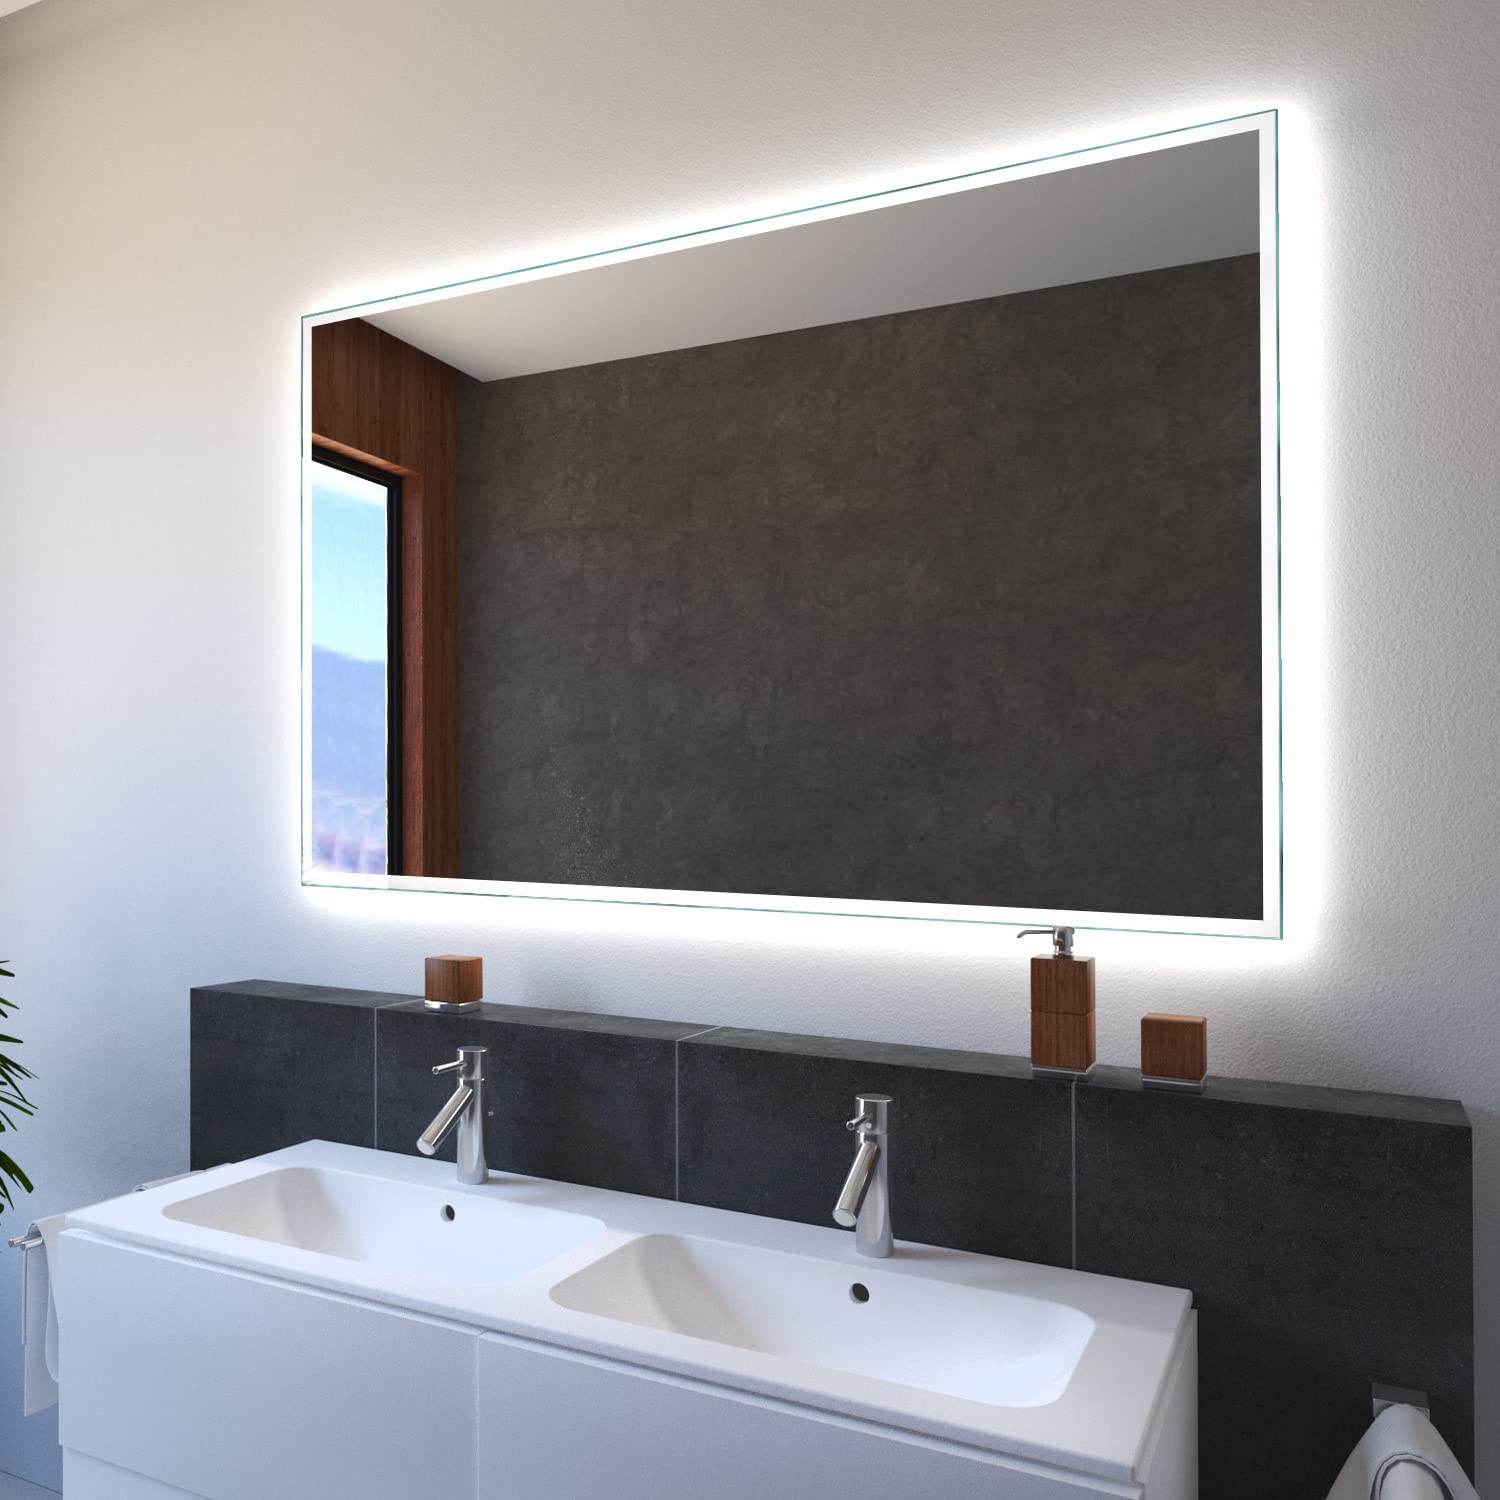 SARAR Wandspiegel mit schmaler rundum LED-Beleuchtung 160x90cm Made in Germany Designo MA4111 Badspiegel Spiegel mit Beleuchtung Badezimmerspiegel nach-auf Maß